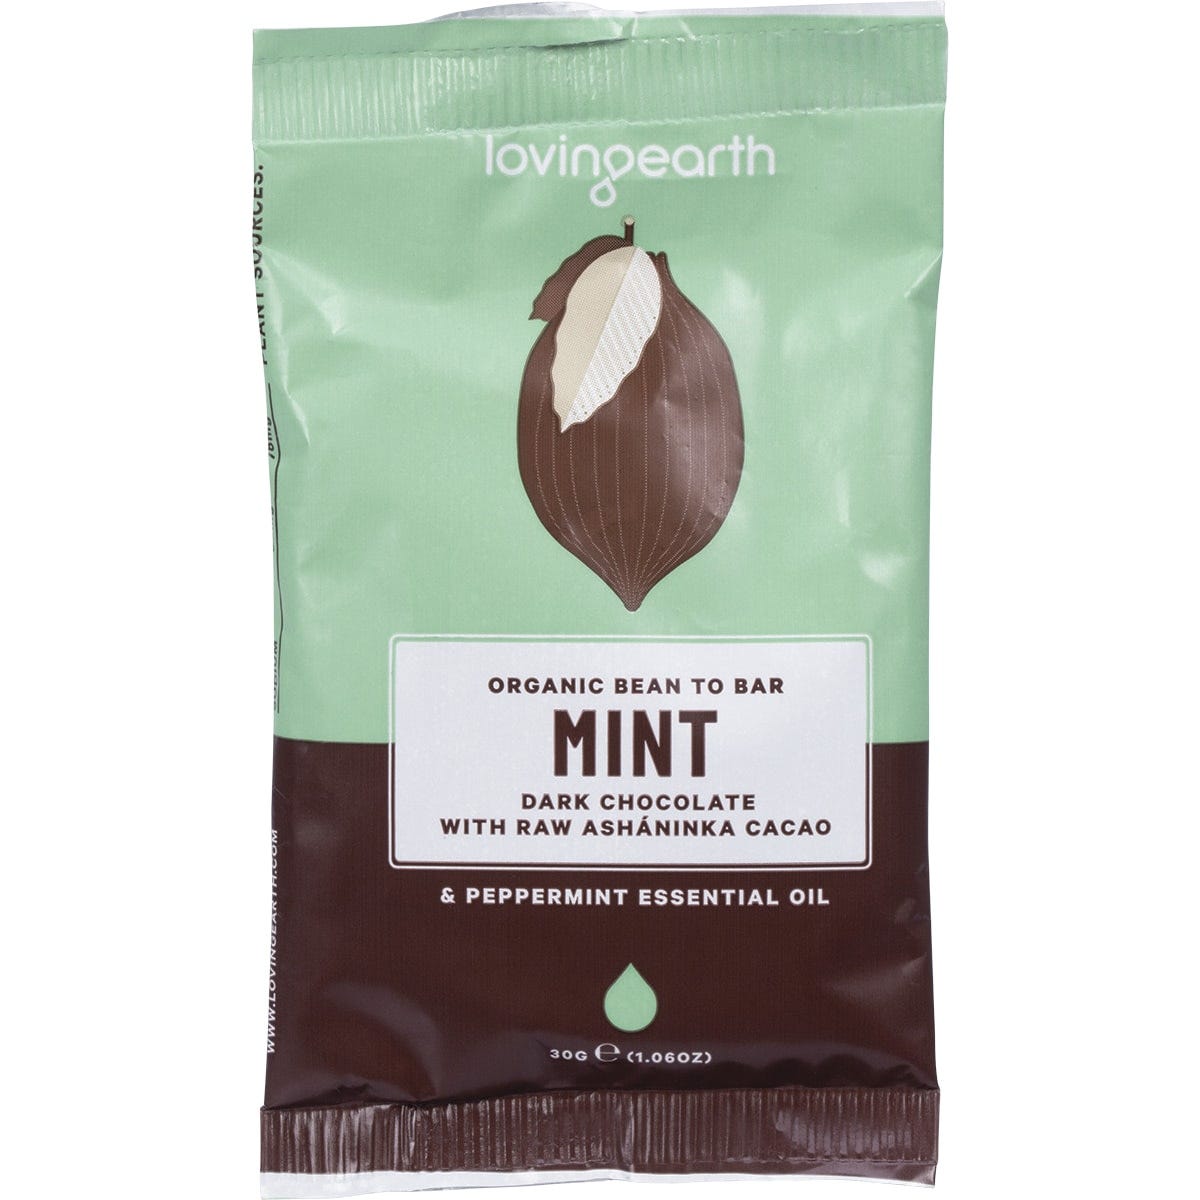 Loving Earth Mint Dark Chocolate with Raw Ashaninka Cacao 30g - Dr Earth - Chocolate & Carob